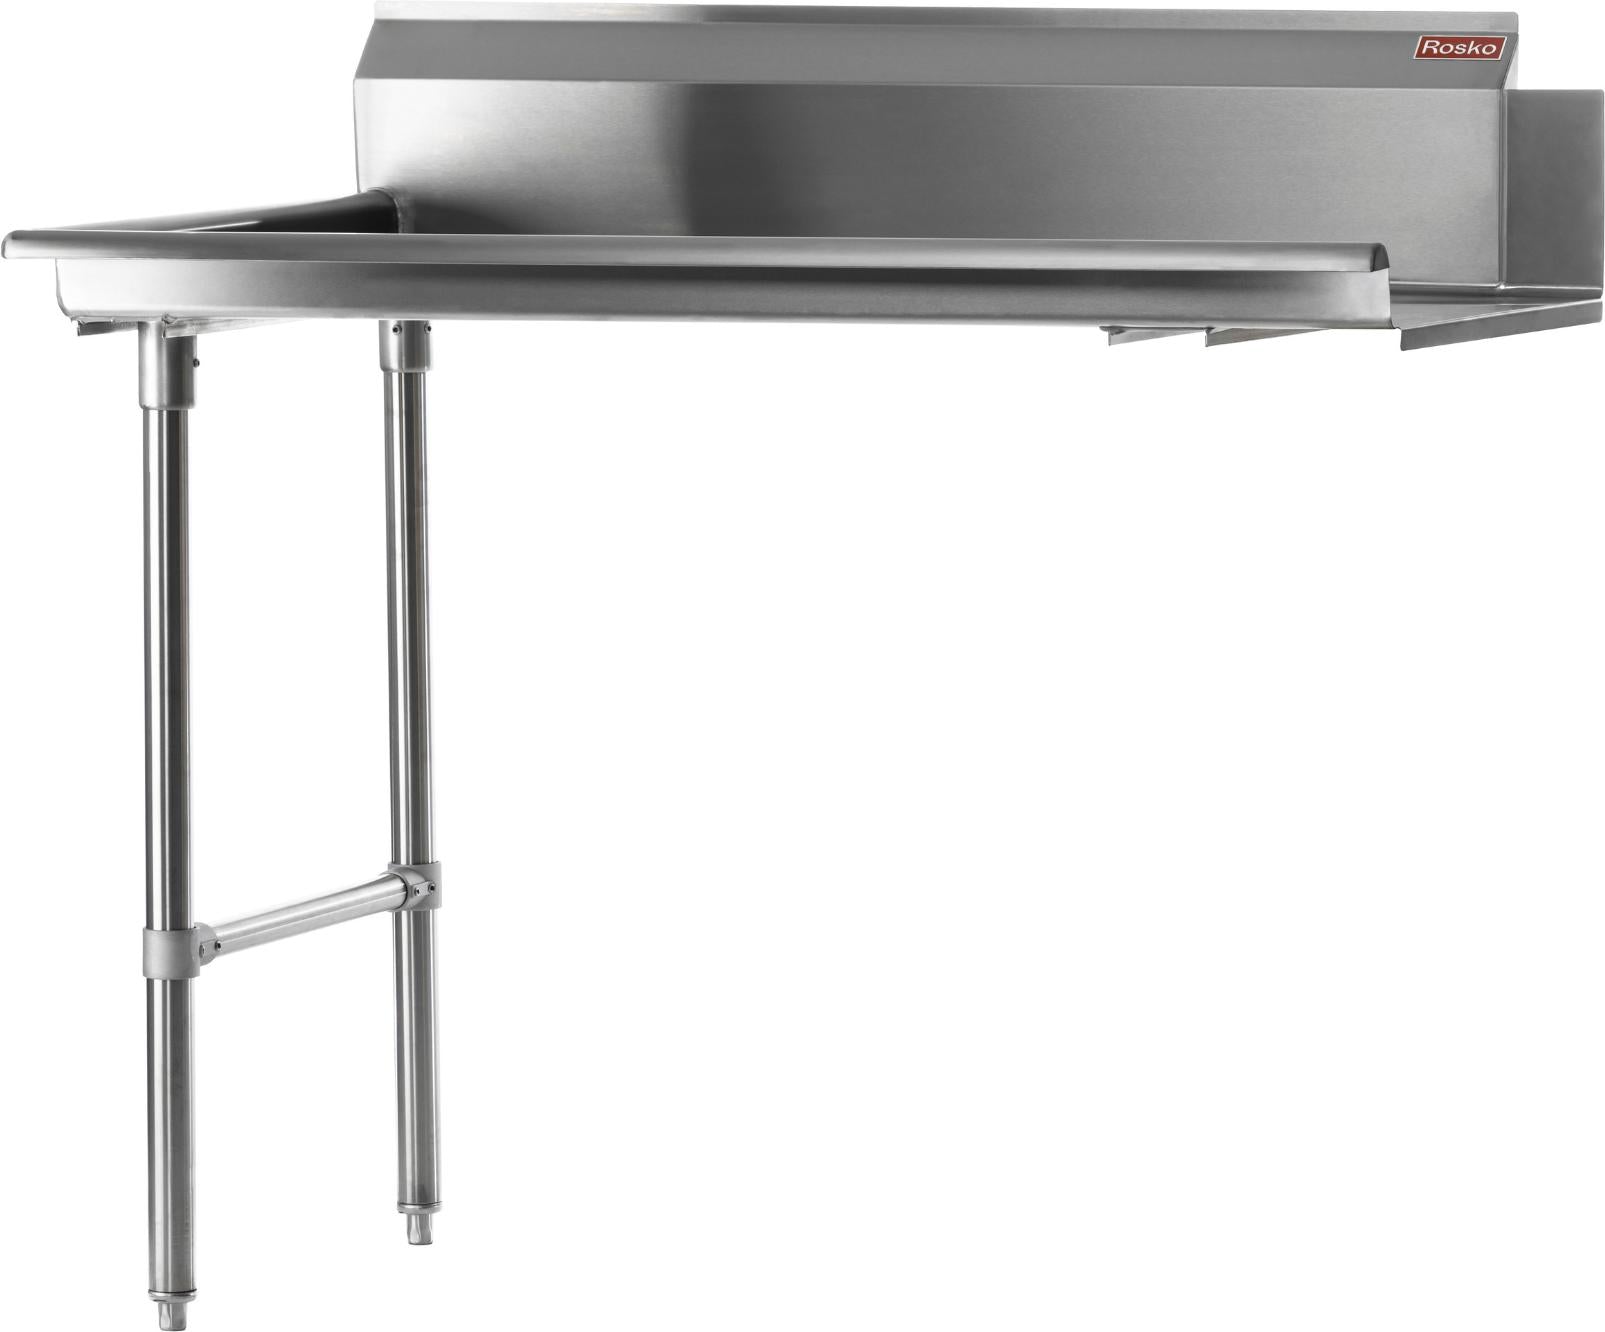 Julien - Rosko 36" x 30" Clean Dish Table, Left Side, Stainless Steel - RO-CDT-3630-L